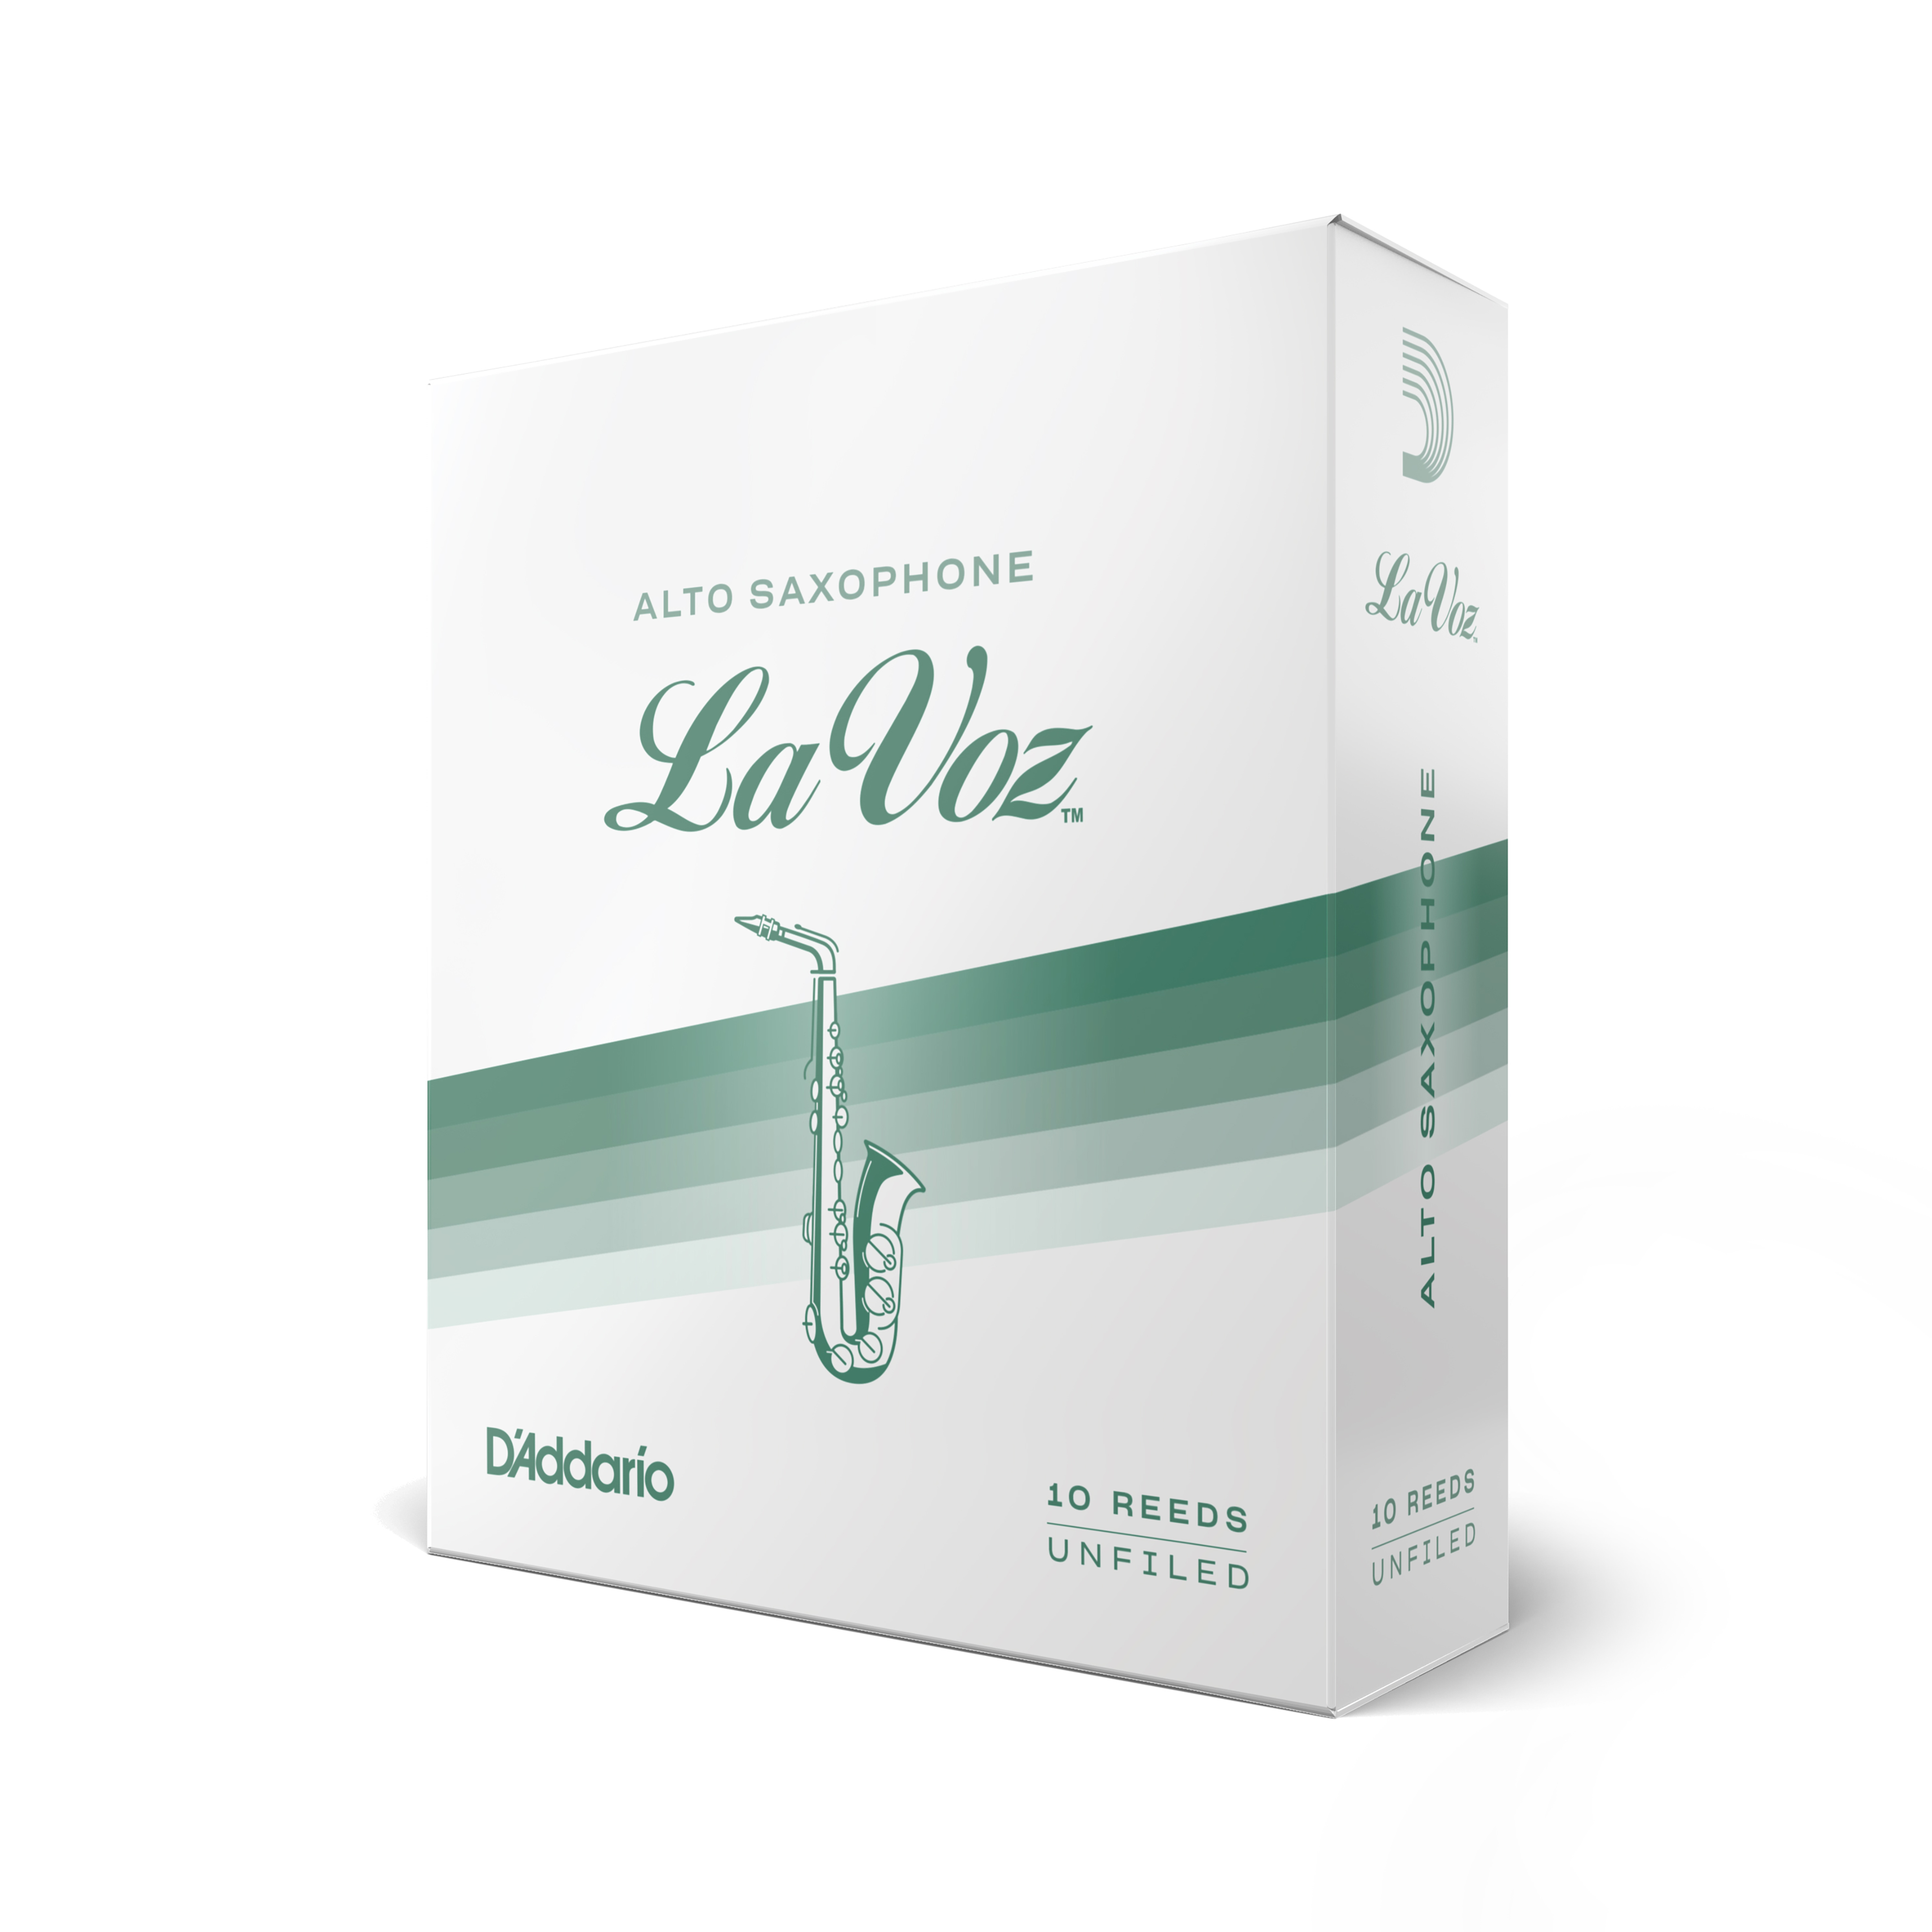 box of ten La Voz by D'addario alto saxophone reeds, medium hard strength